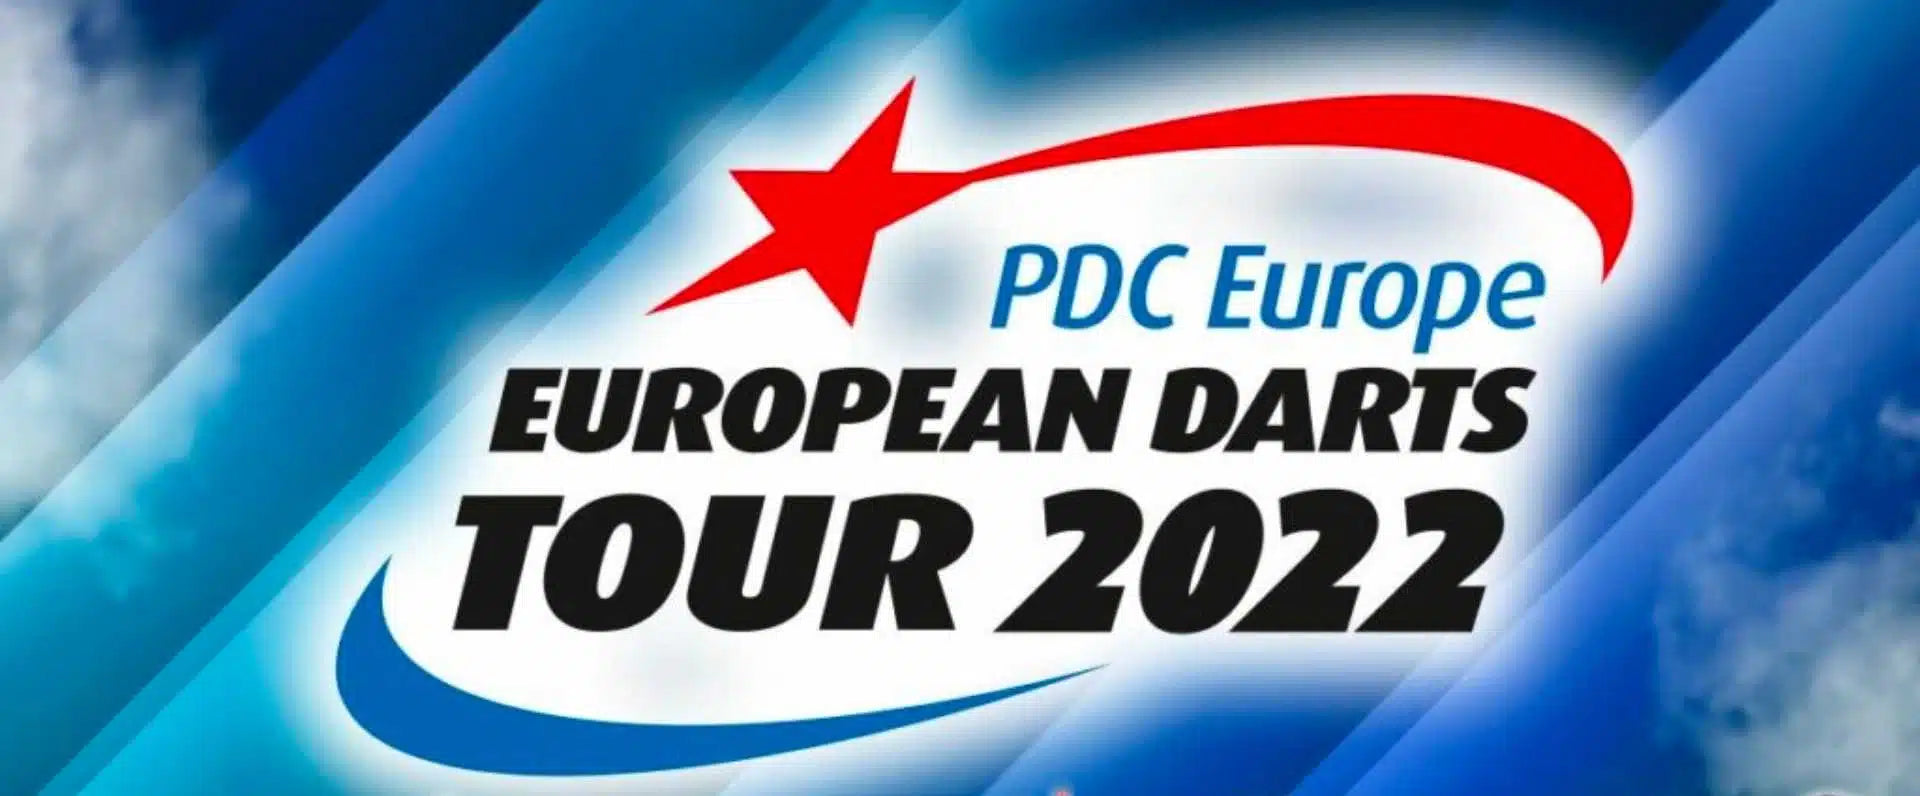 darts pdc european tour live stream